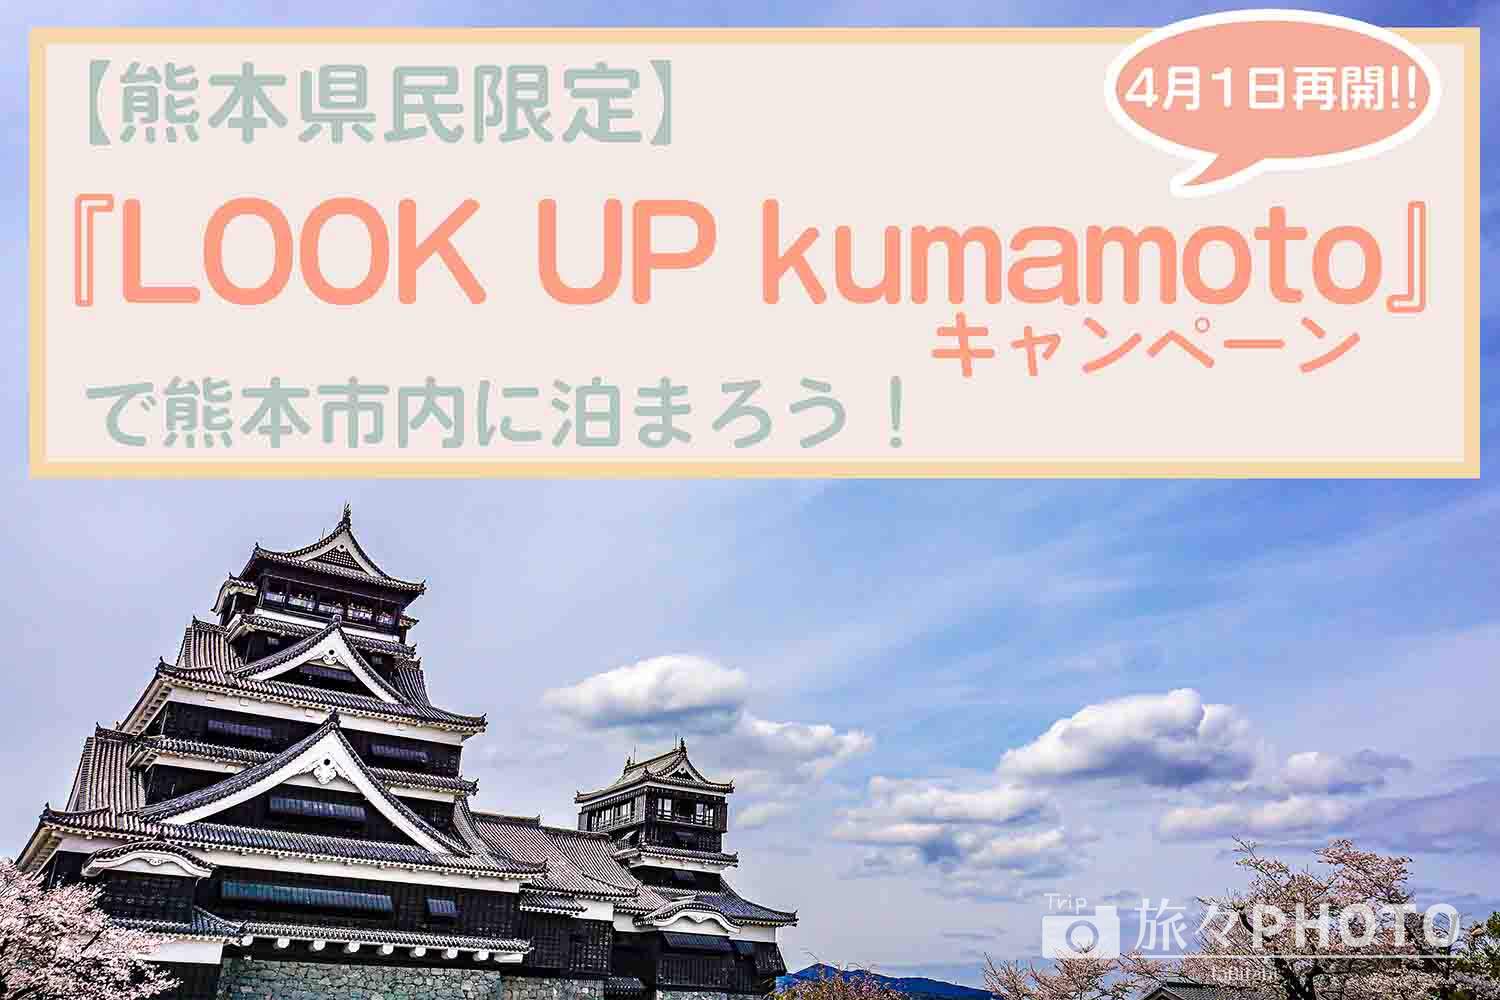 look up kumamotoアイキャッチ画像